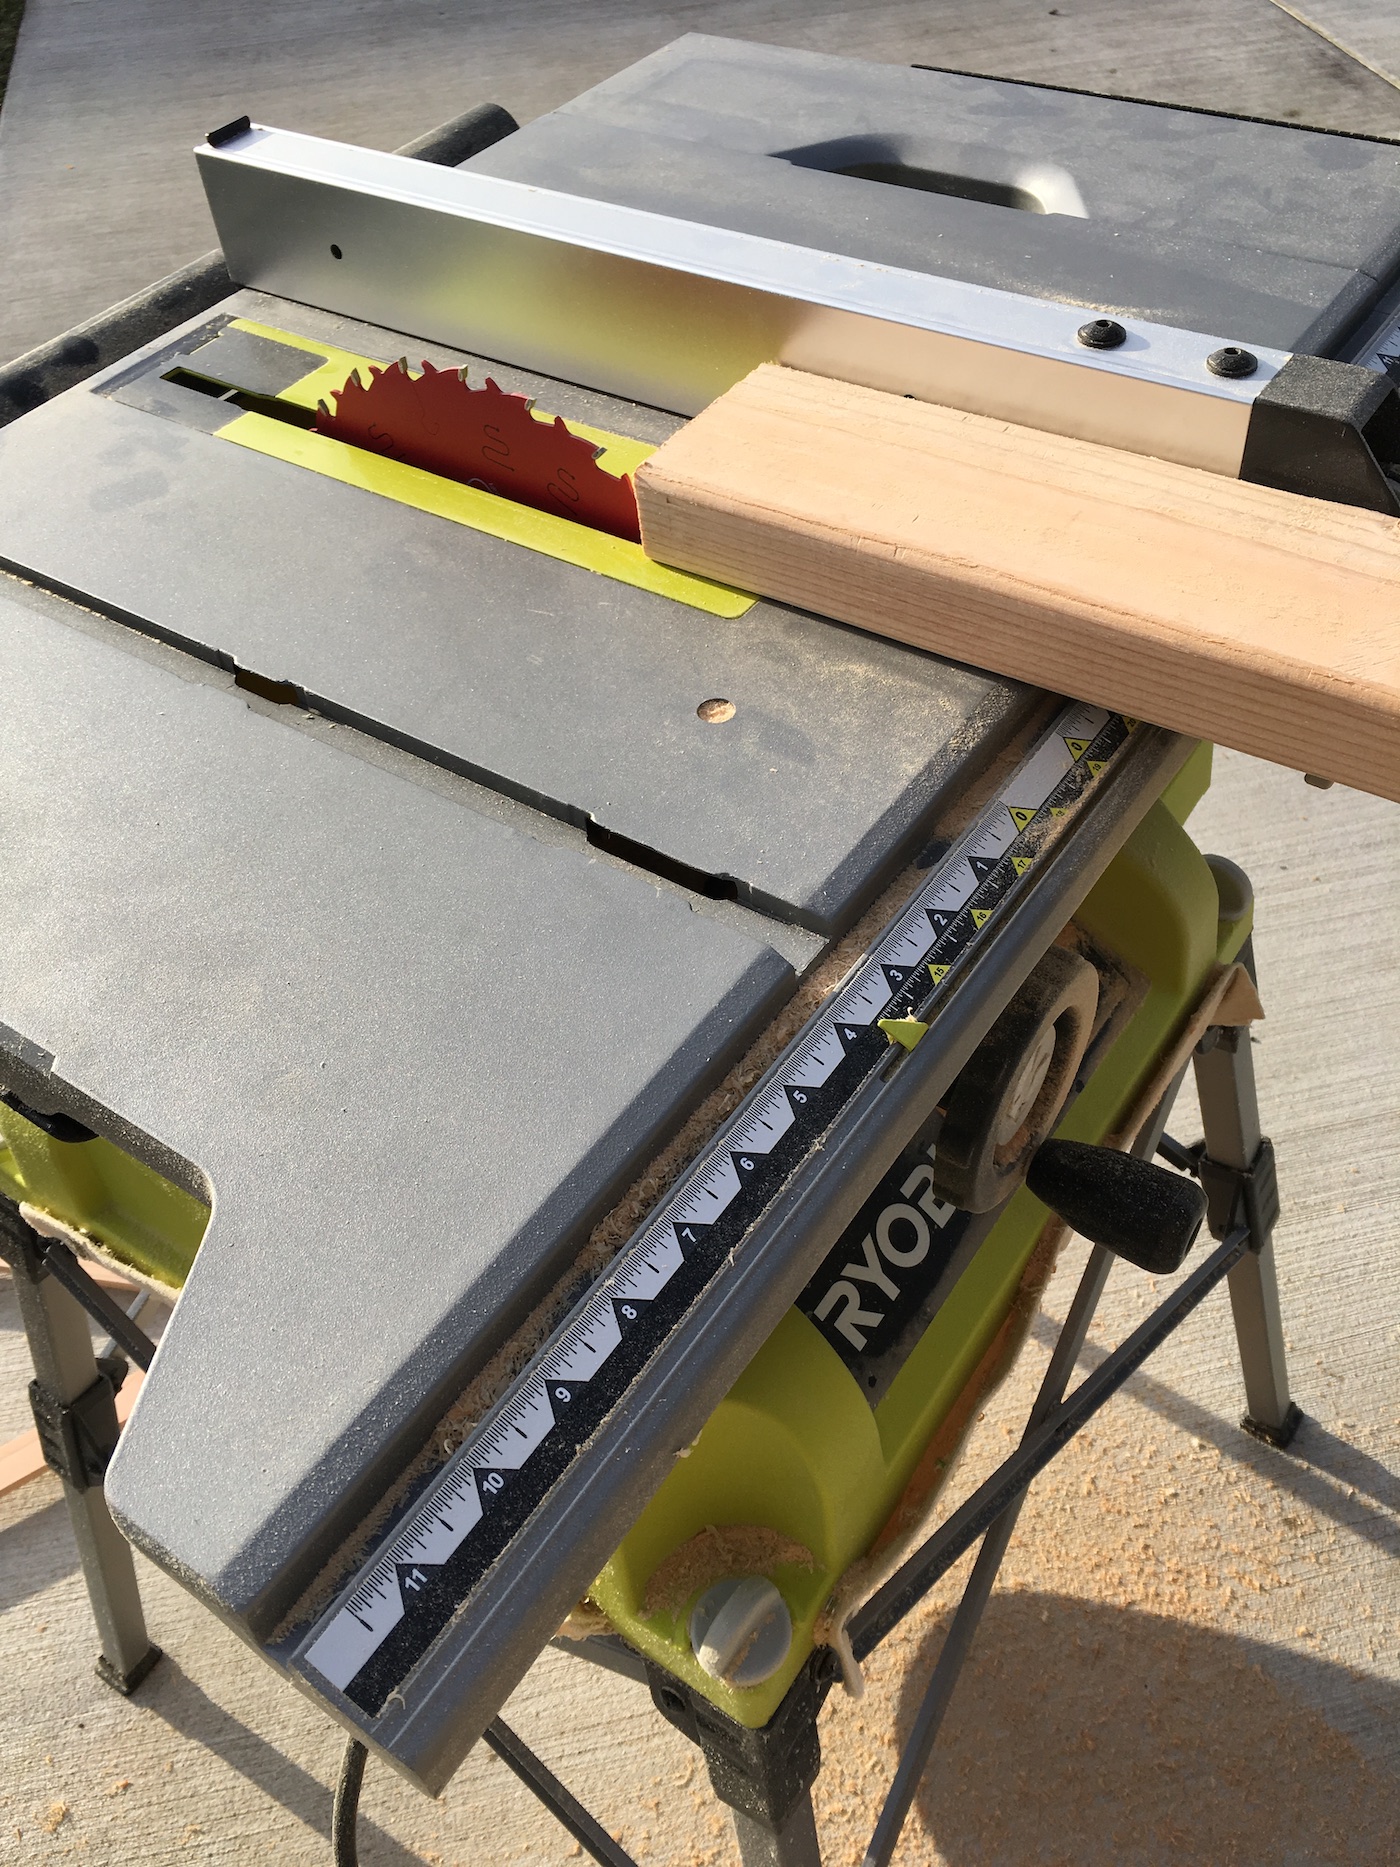 Cutting a wood board with a Ryobi table saw